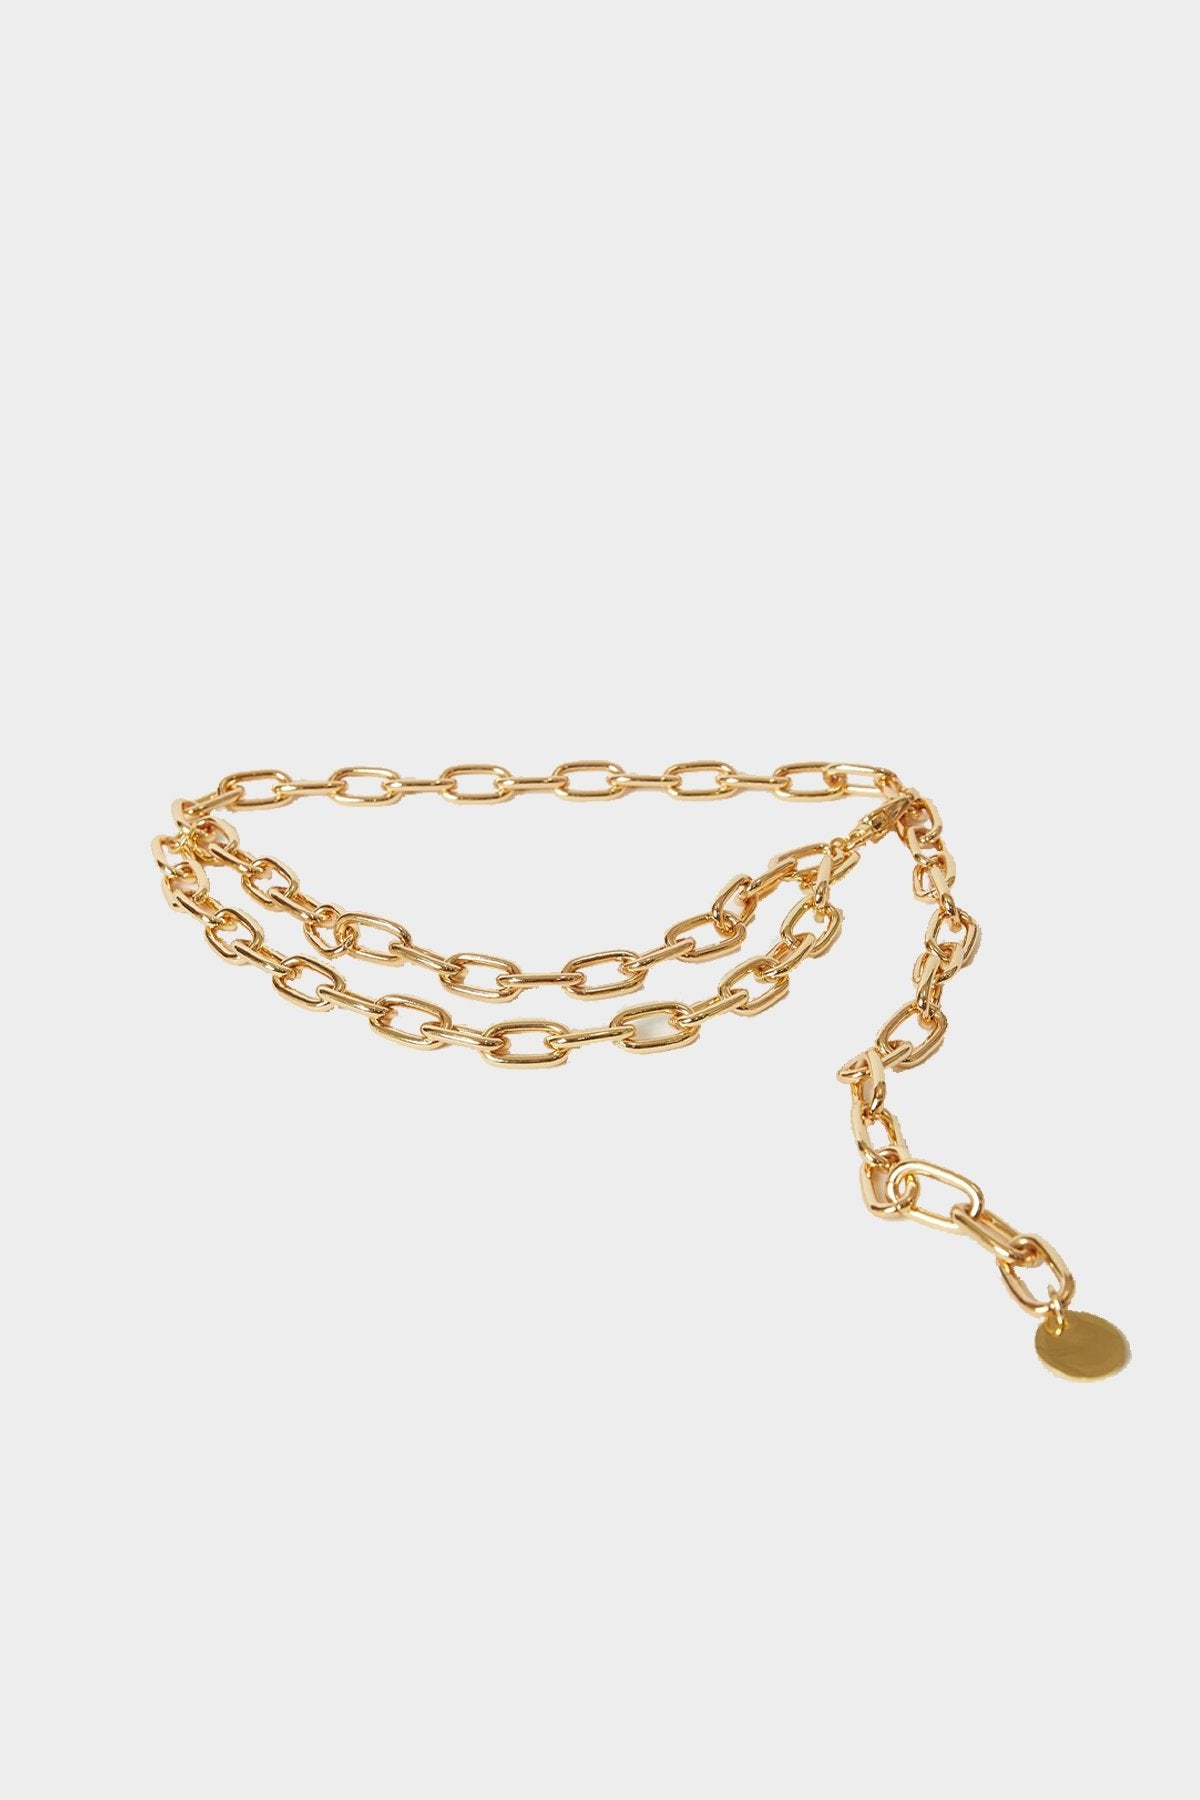 Maisie Chain Belt in Gold - shop-olivia.com